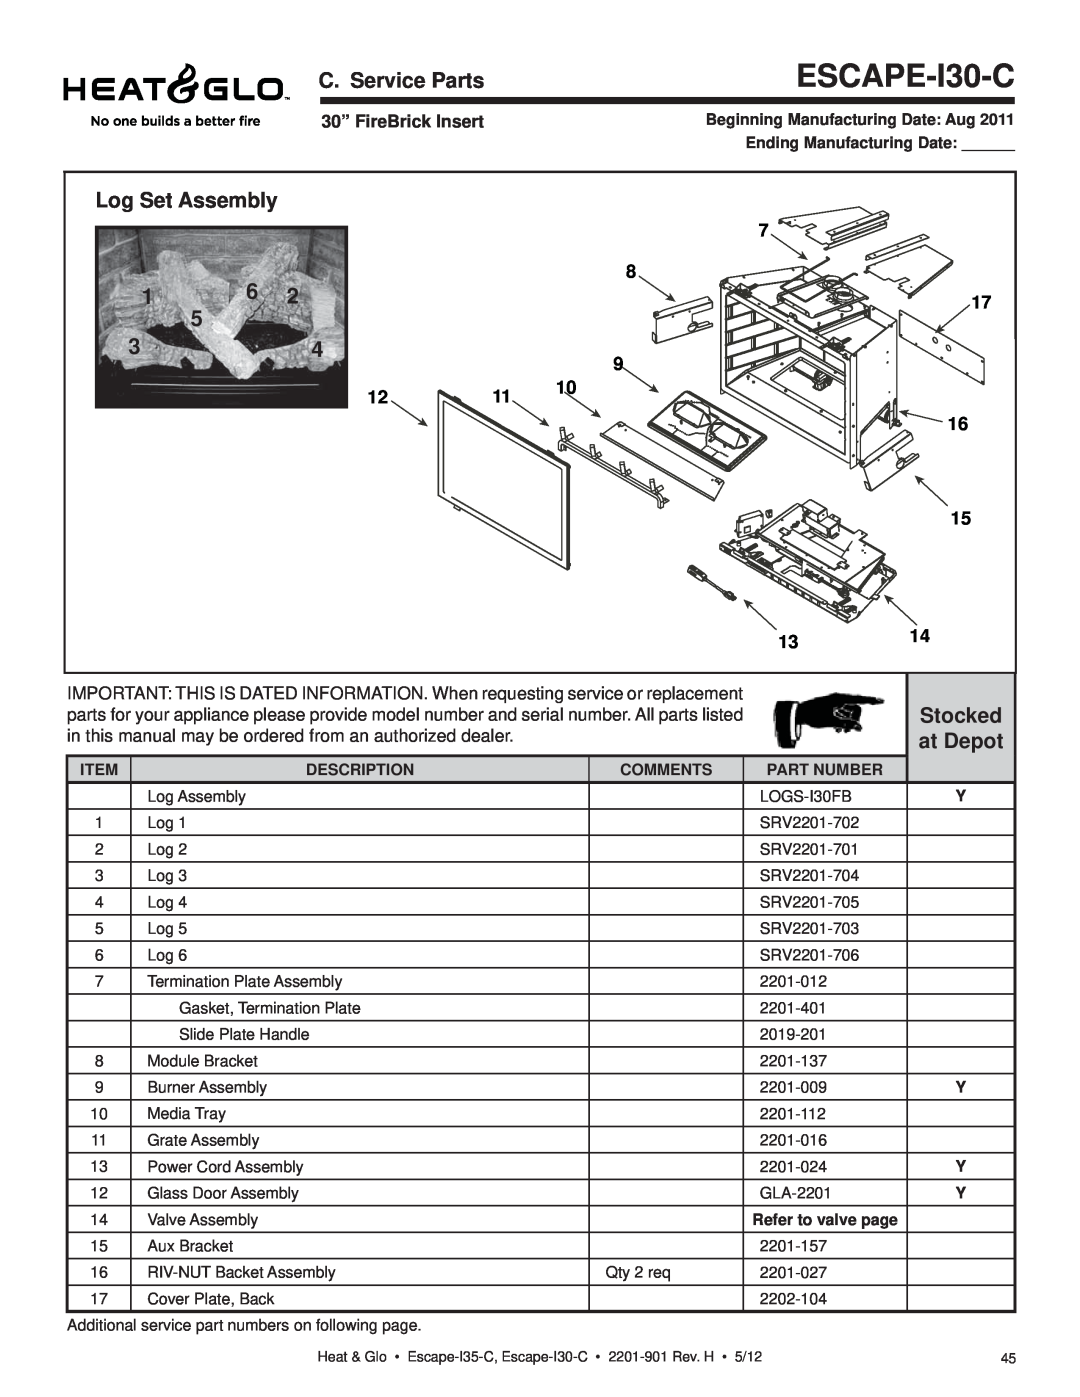 Heat & Glo LifeStyle ESCAPE-I35-C owner manual ESCAPE-I30-C, C. Service Parts, Log Set Assembly, at Depot, Stocked 